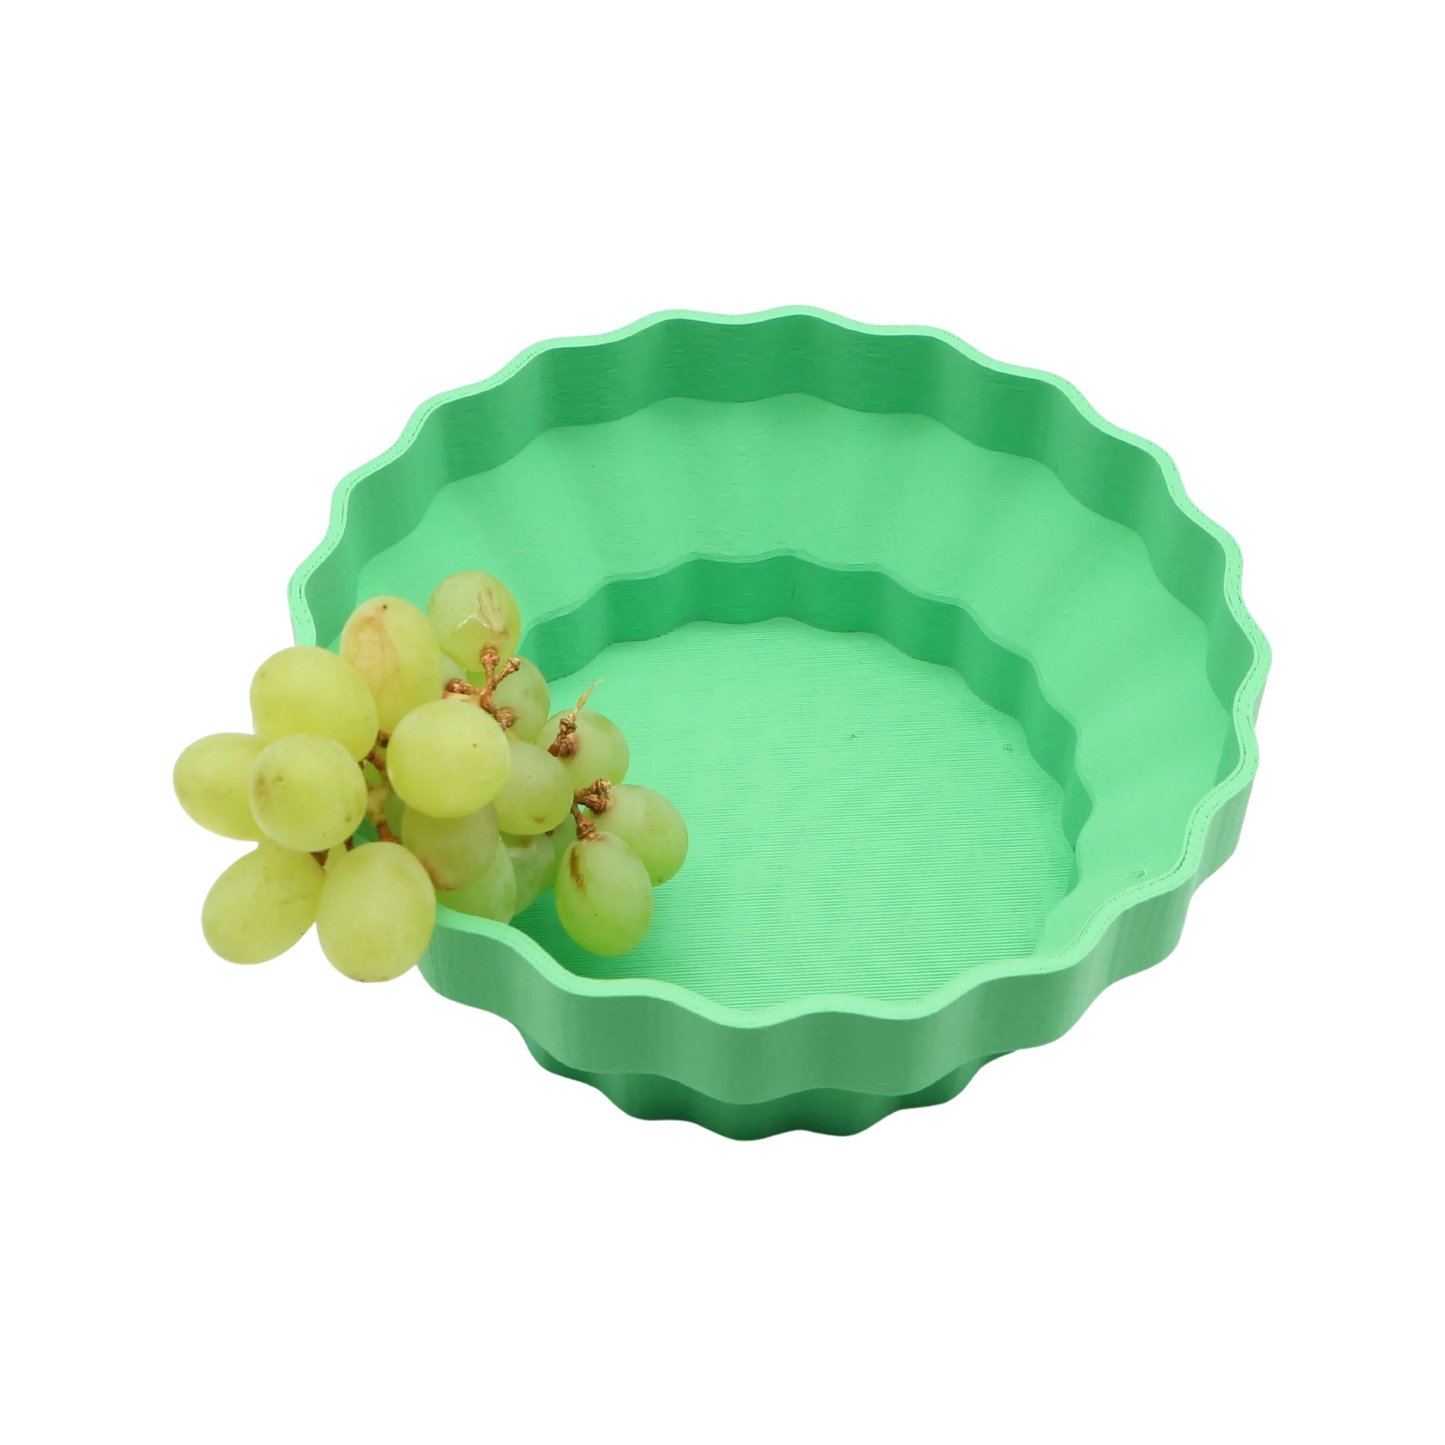 Ferrara fruit bowl green edition